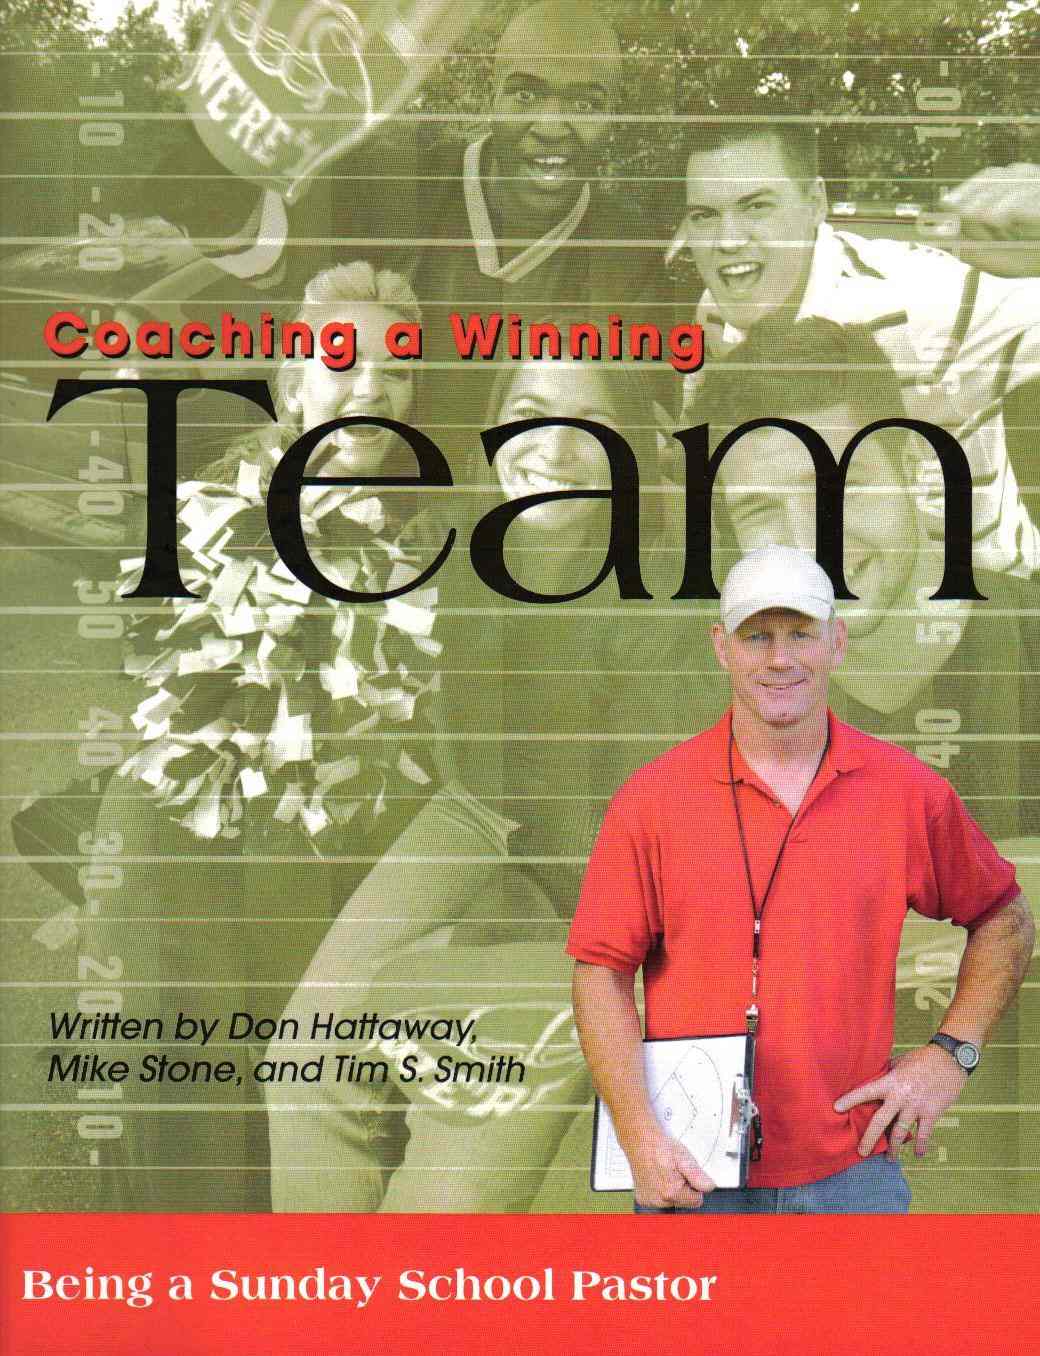  <!--a-->Coaching a Winning Team:  Being a Sunday School Pastor